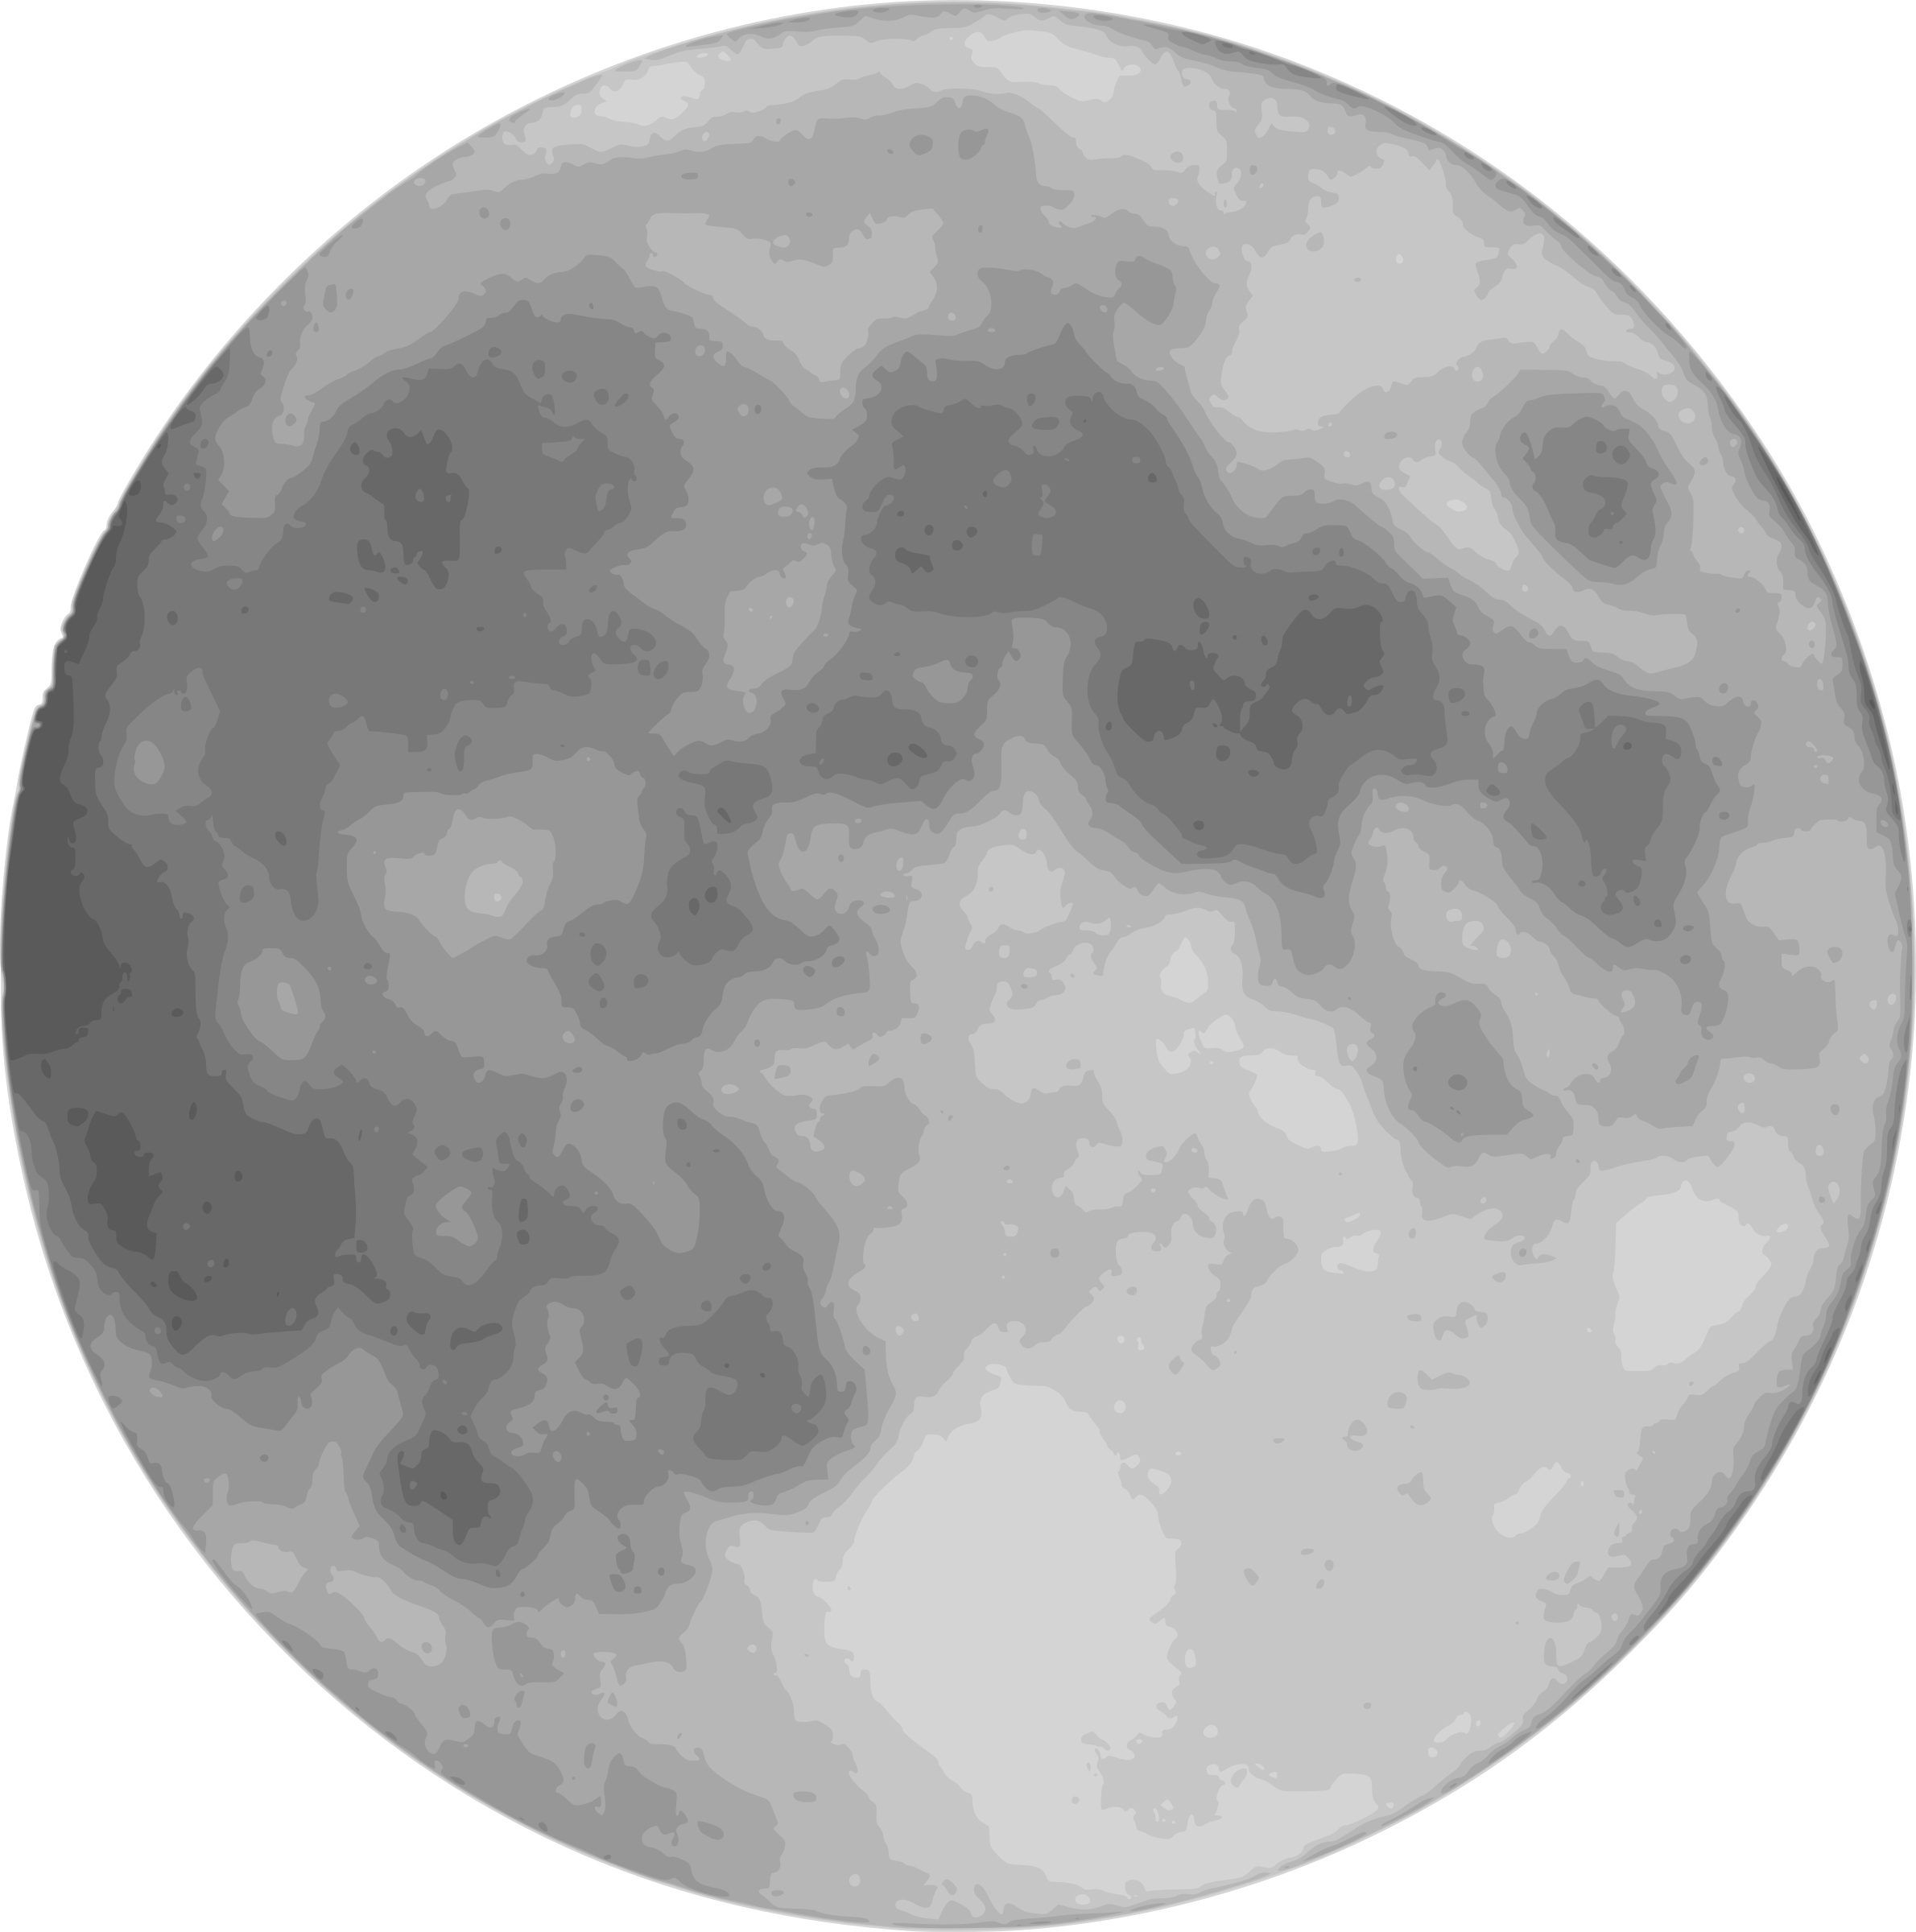 Moon Transparent Image PNG Image